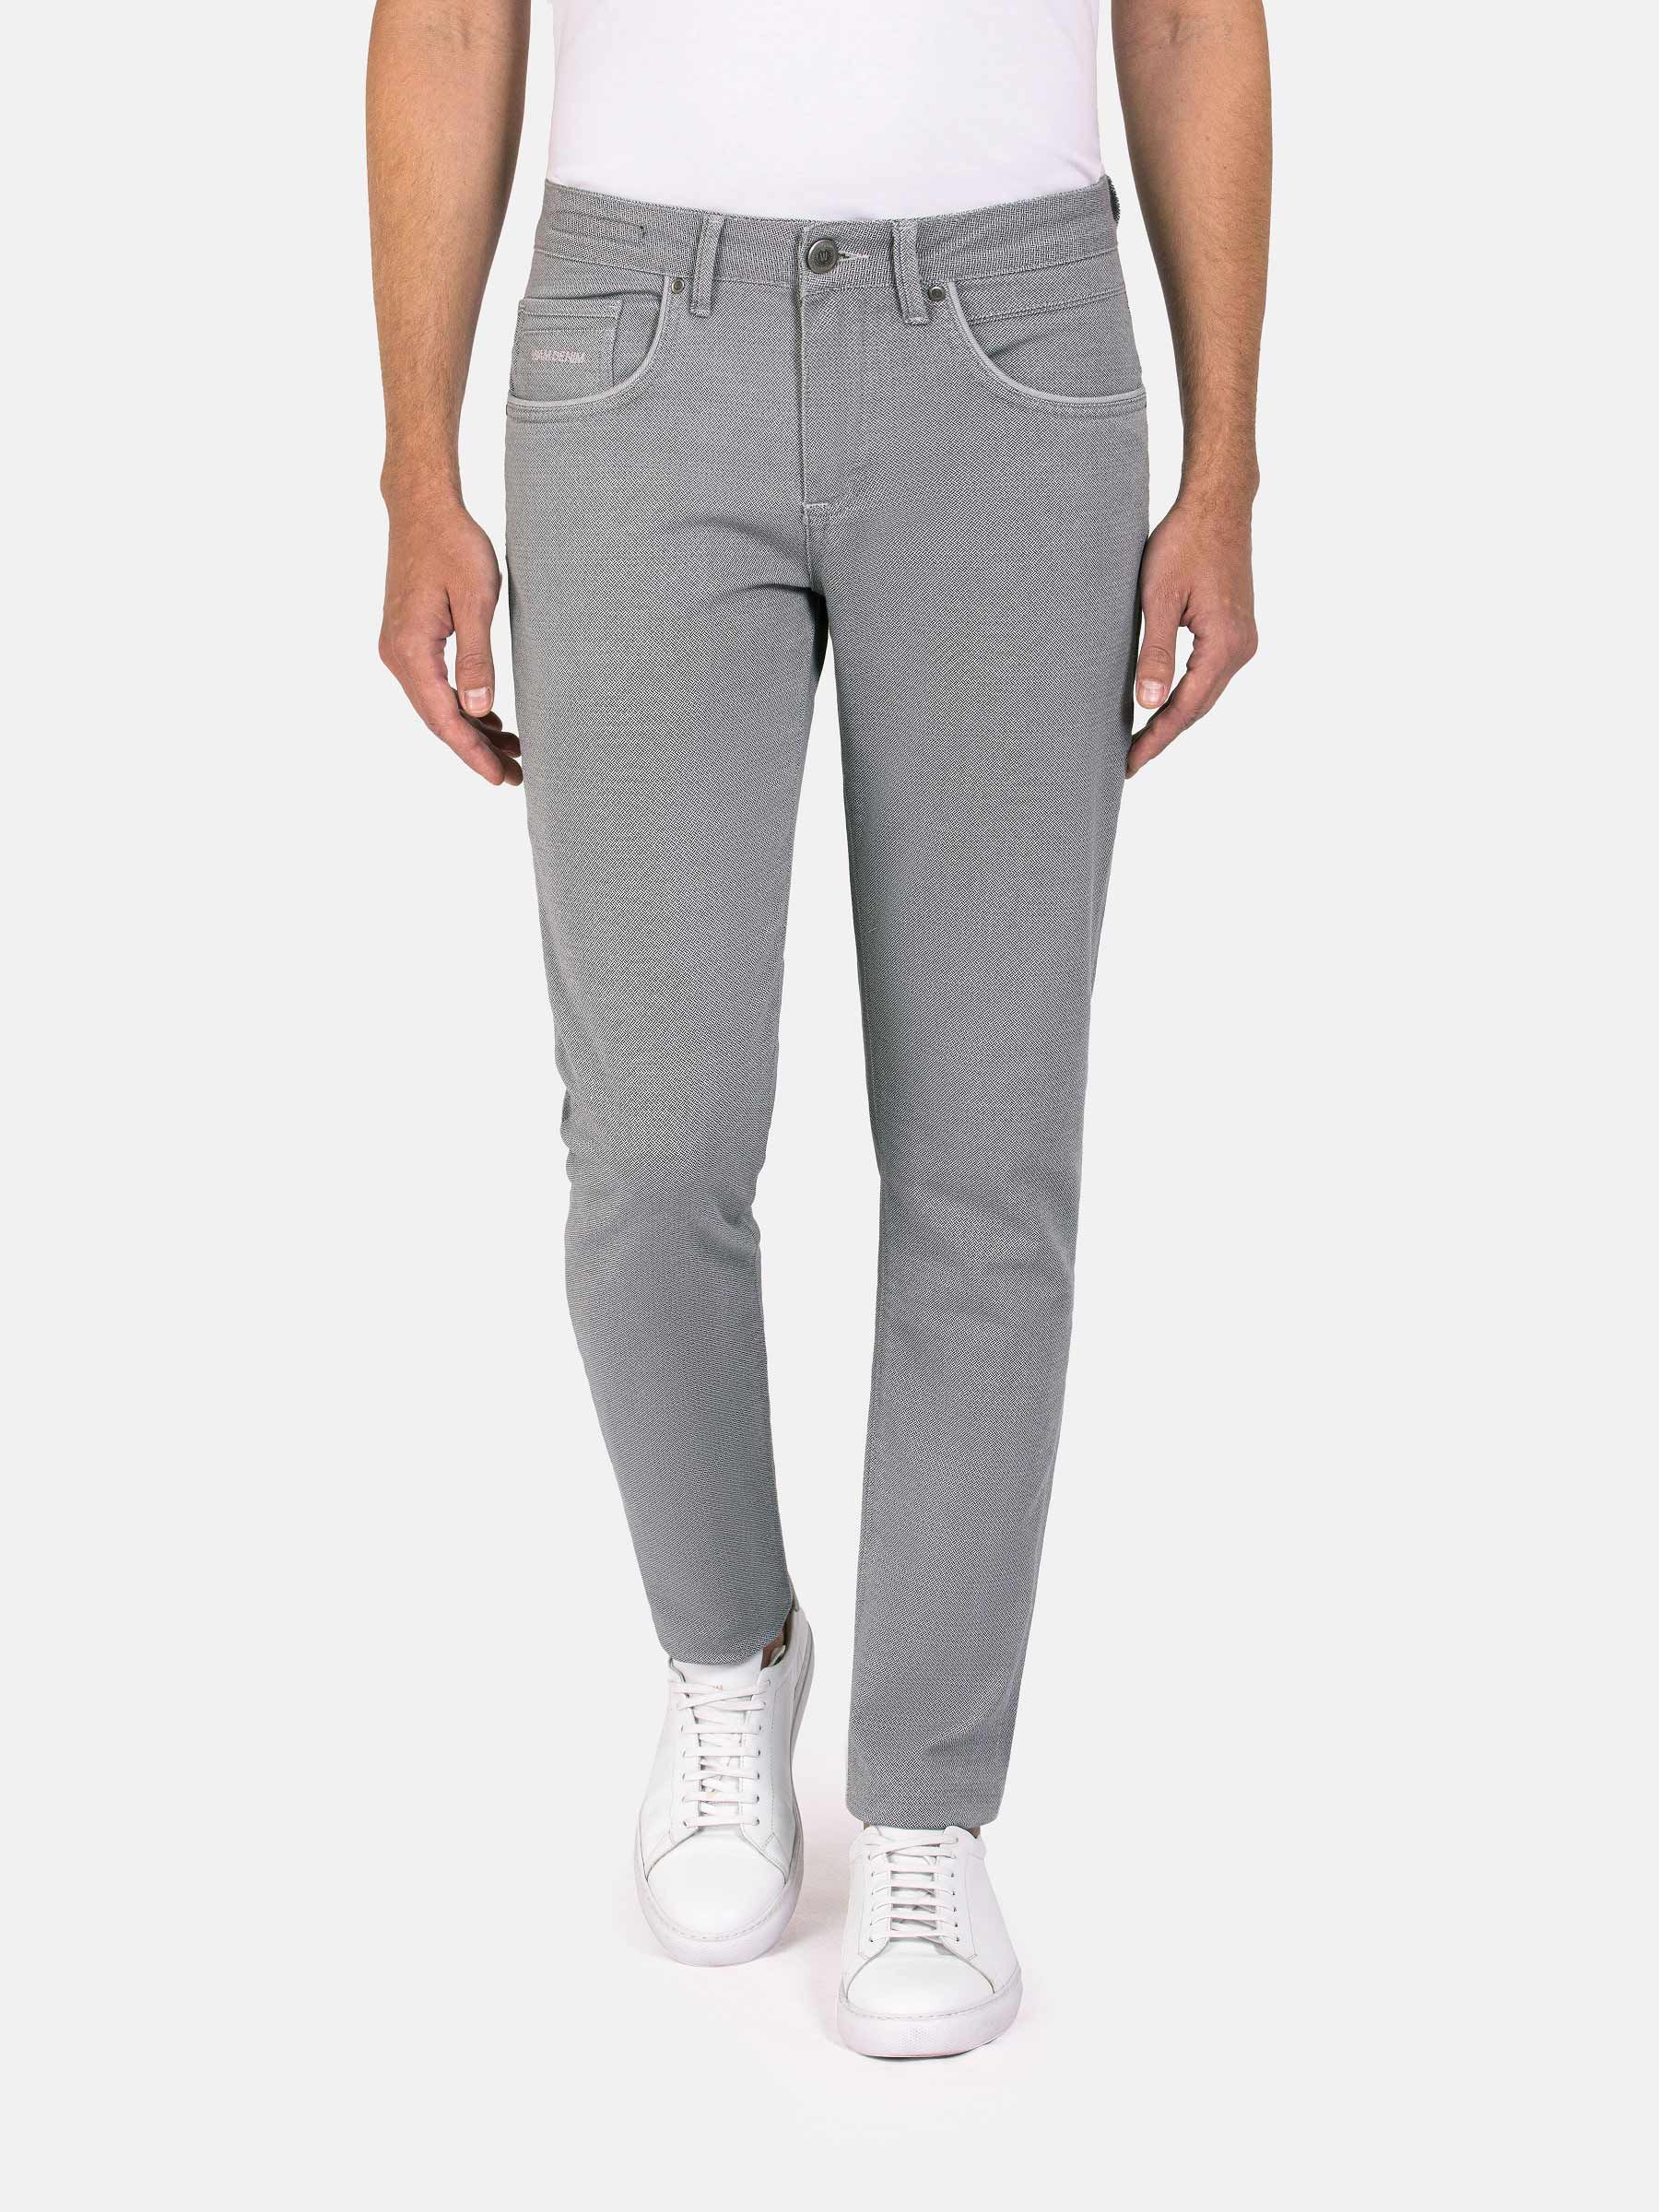 Calvin Klein pants jeans 1 model, dark gray color | Men's clothing |  Official archives of Merkandi | Merkandi B2B